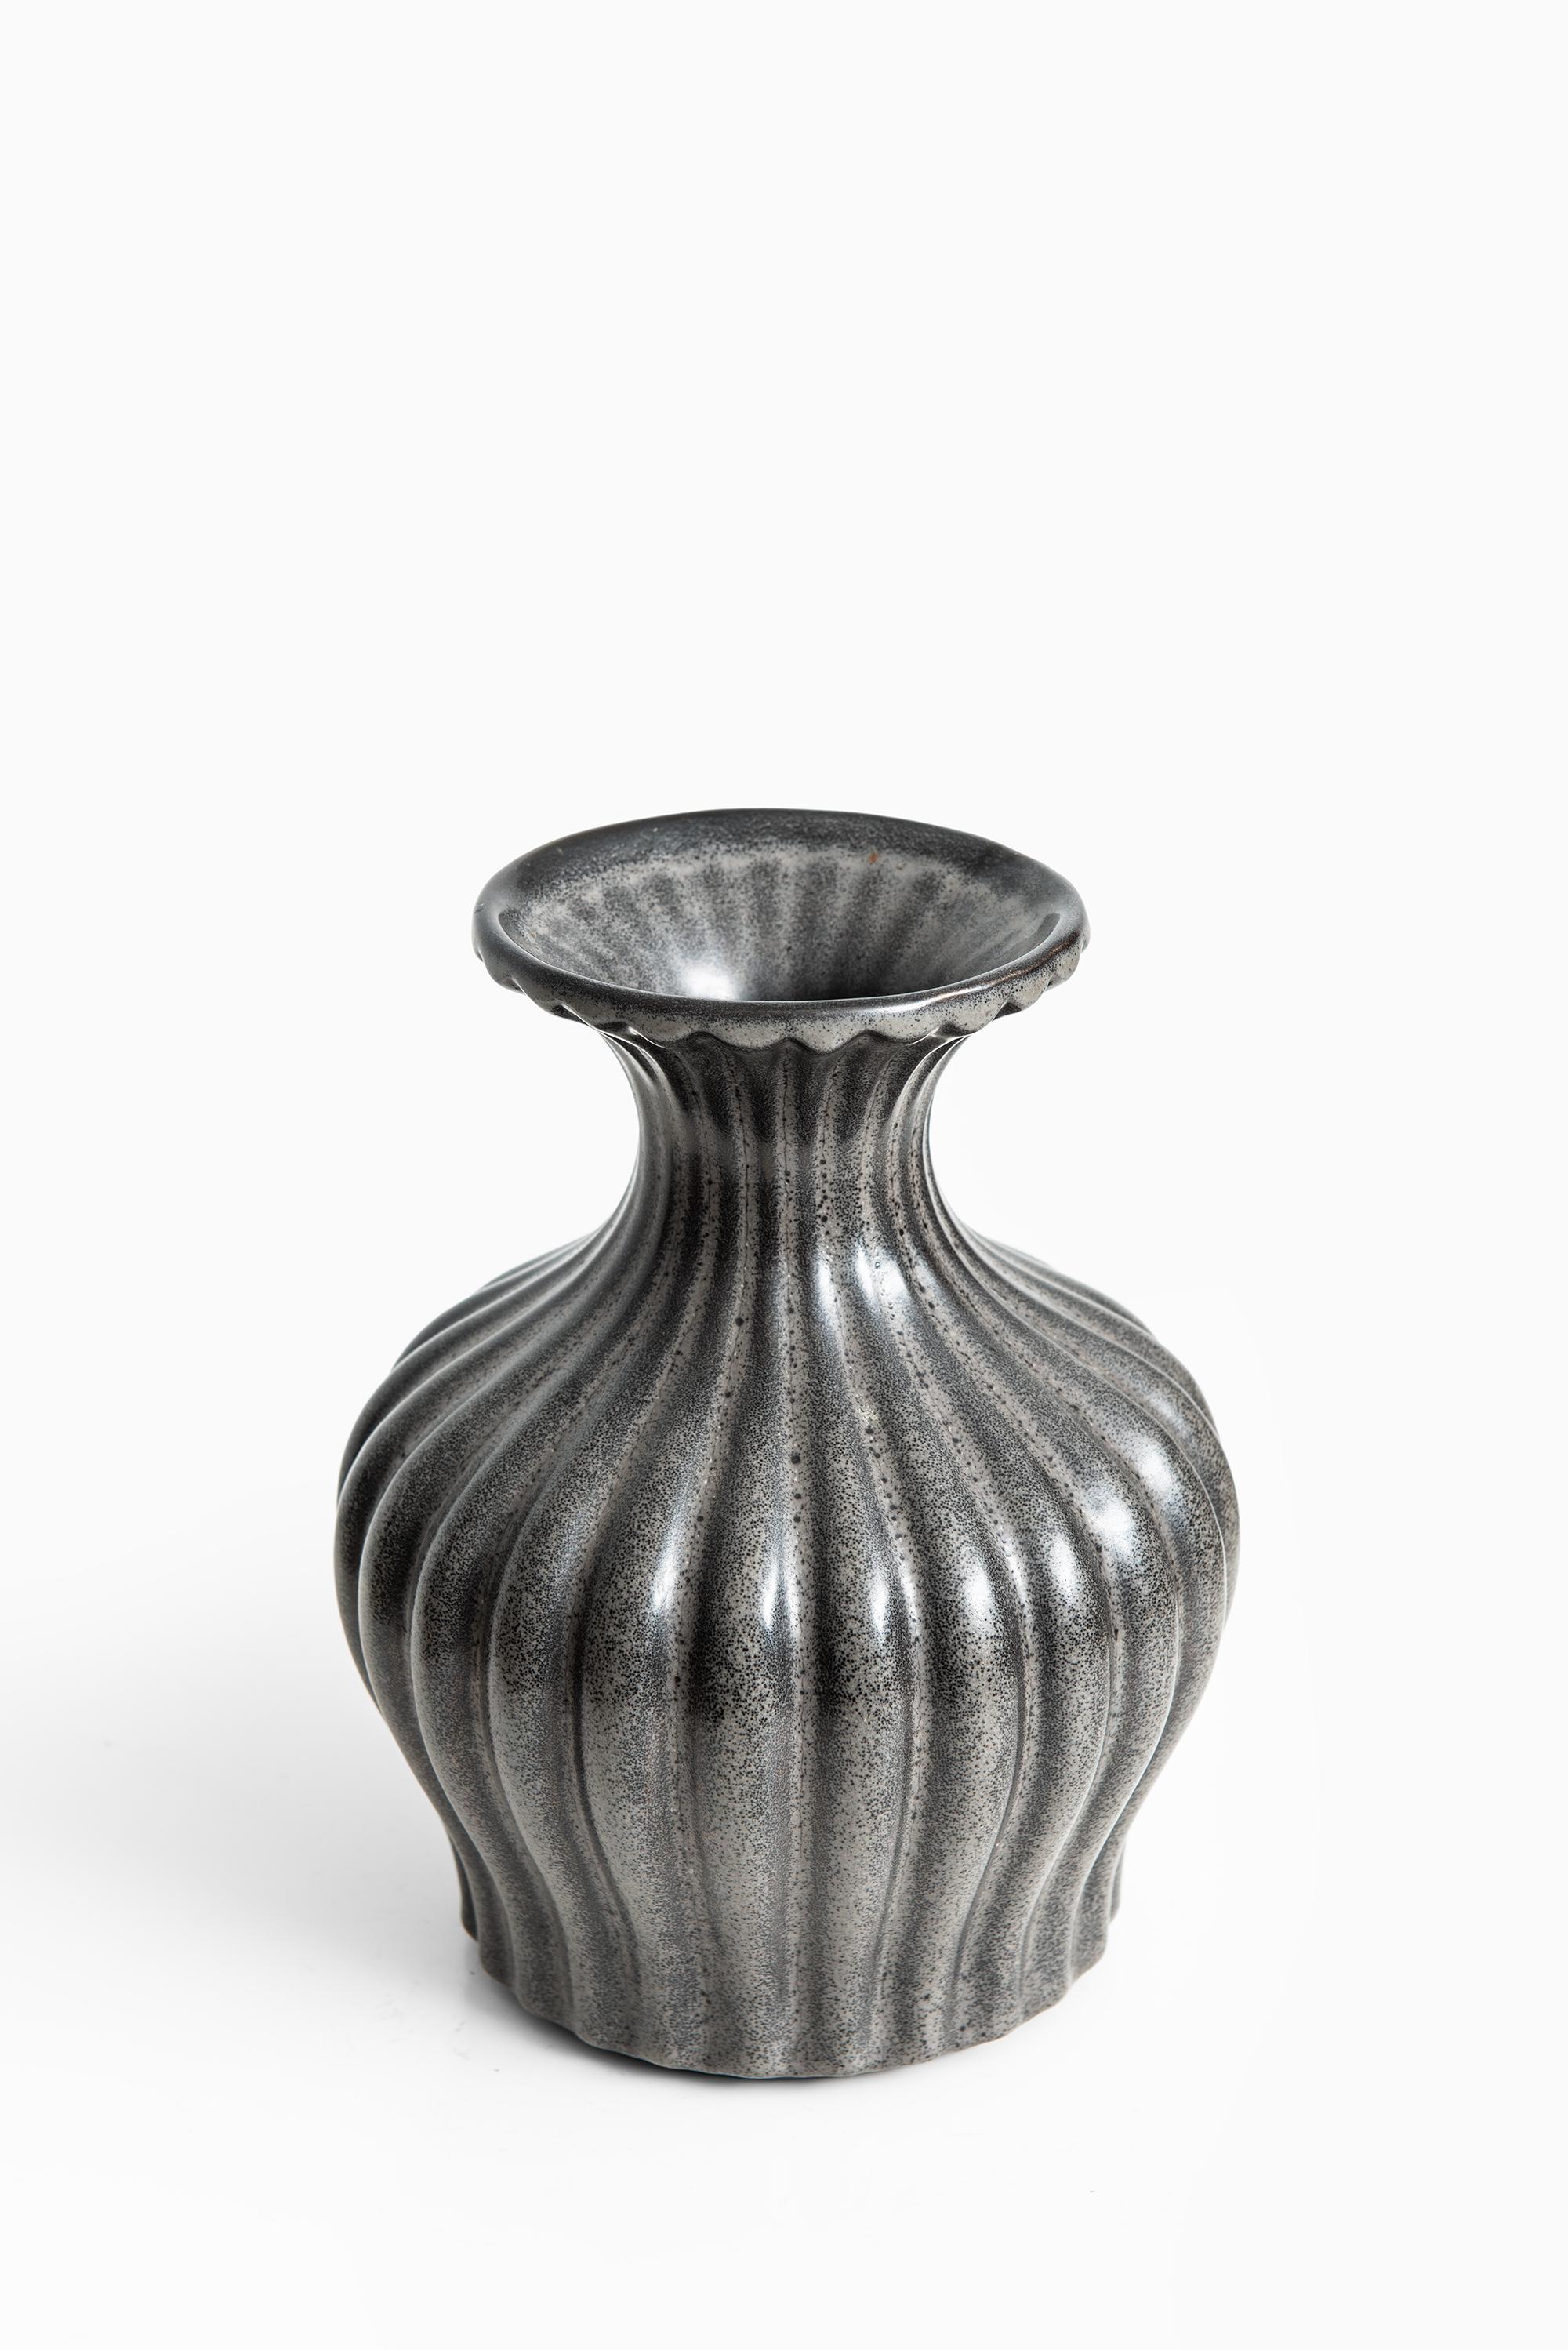 Mid-20th Century Ewald Dahlskog Ceramic Vase Produced by Bobergs Fajansfabrik in Sweden For Sale